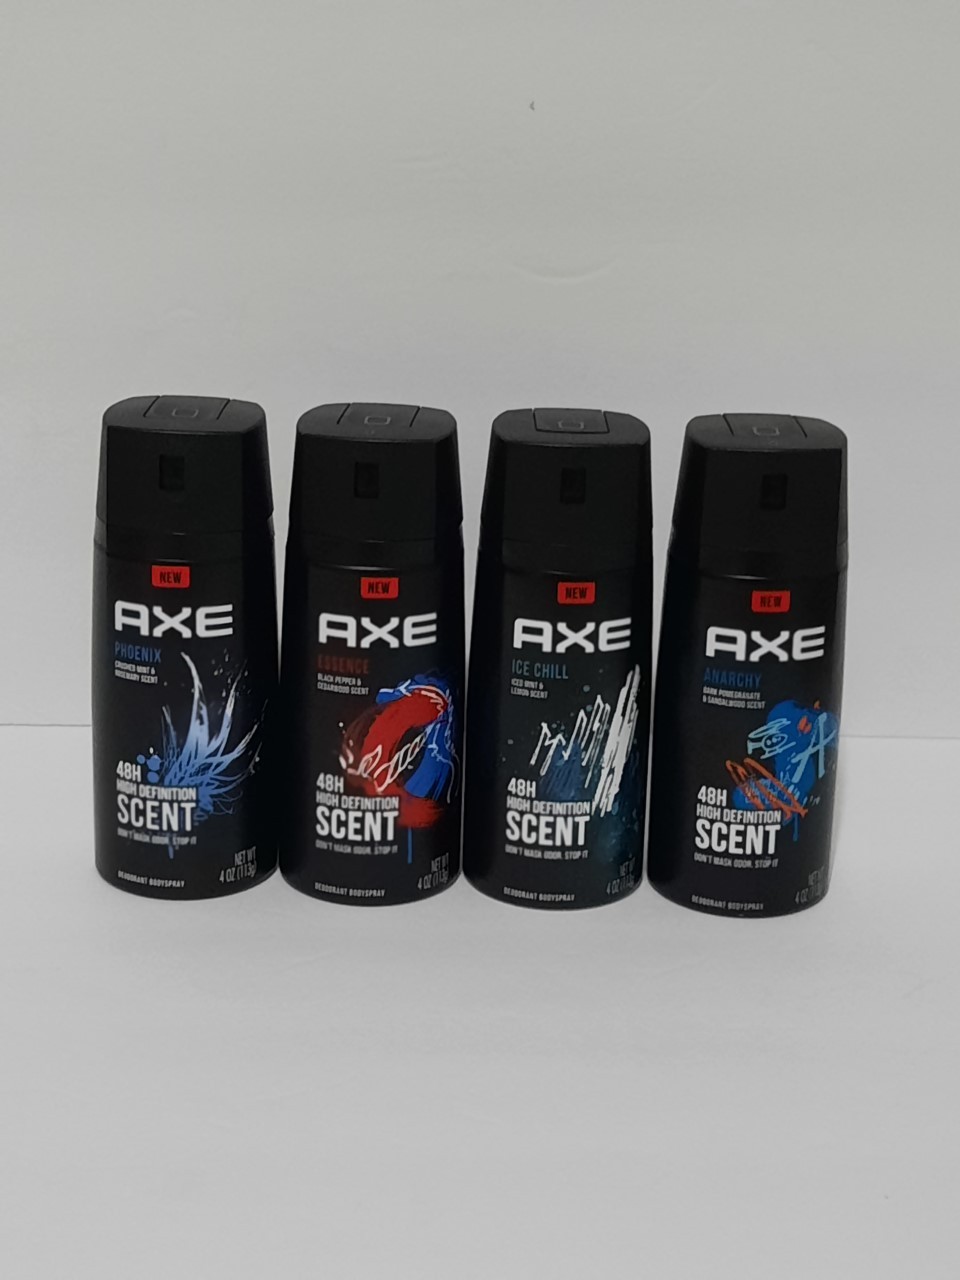 Primary image for men's bodyspray axe 